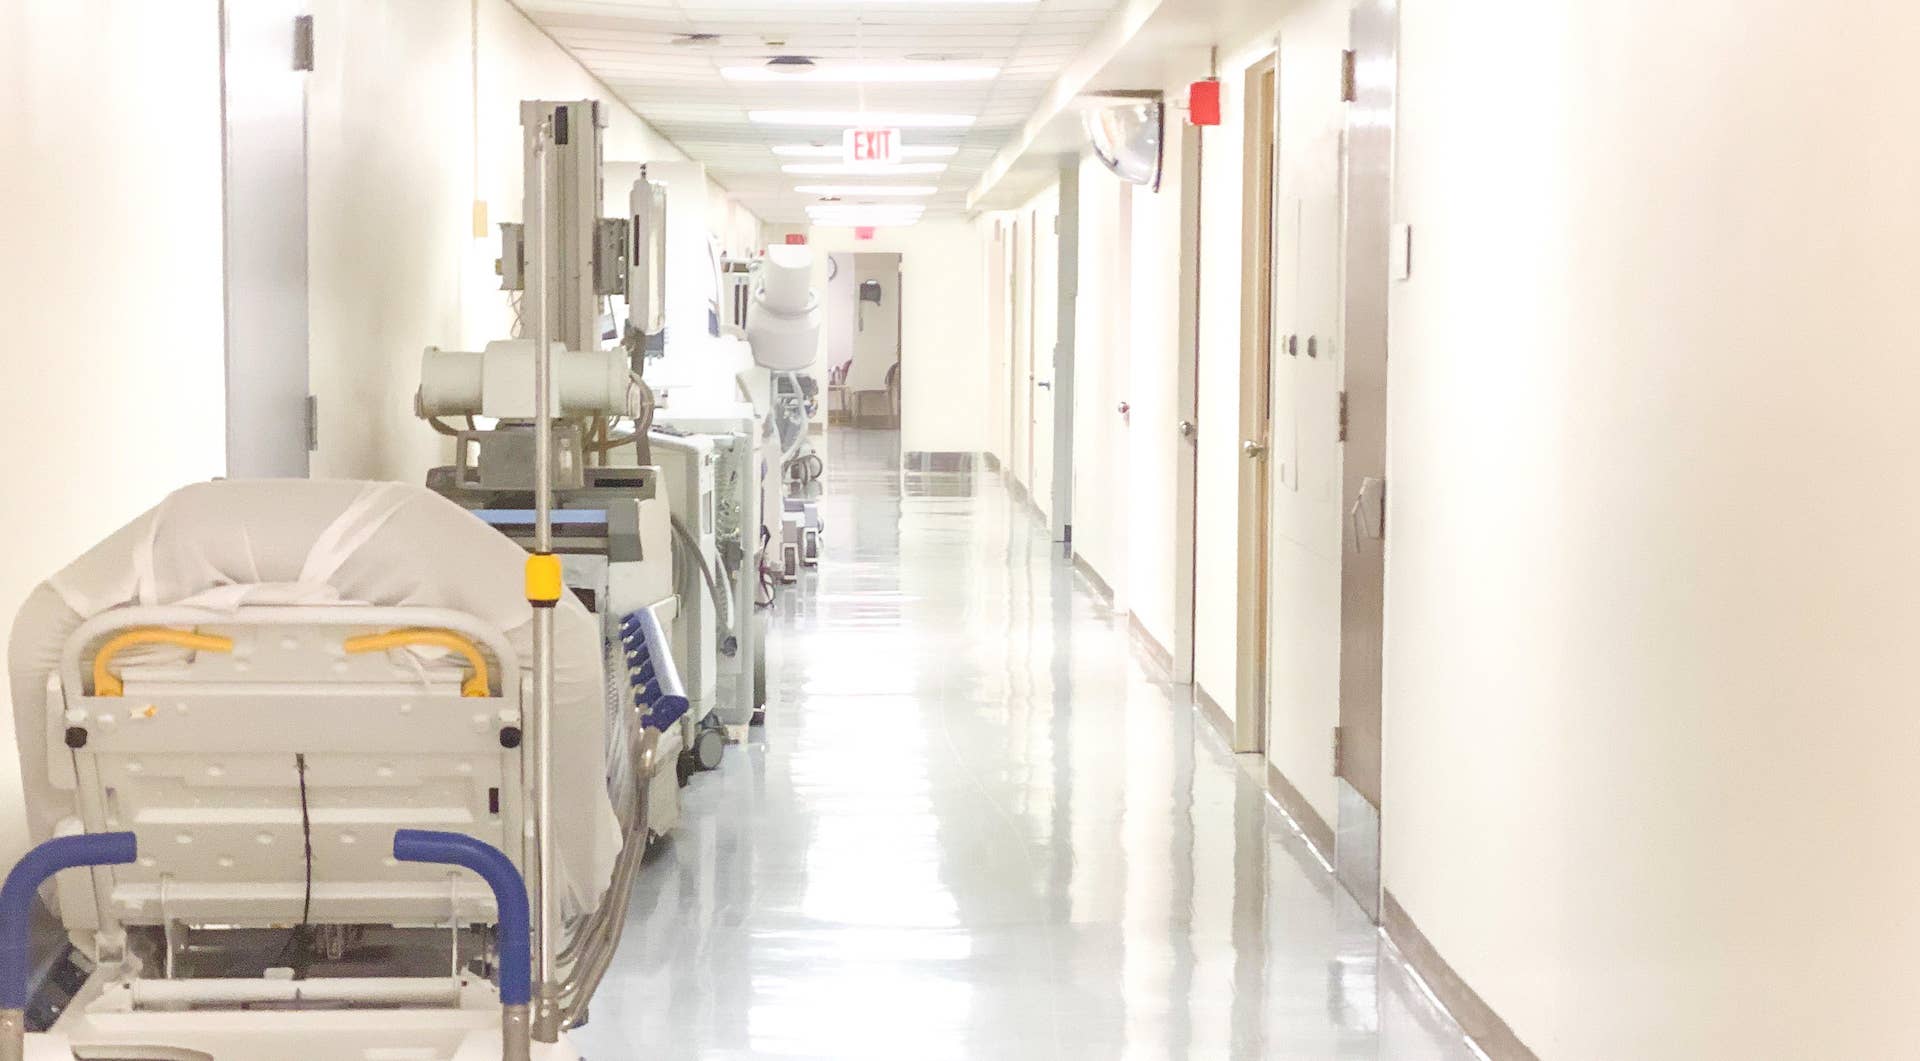 Hospital hallway corridor lined with medical equipment